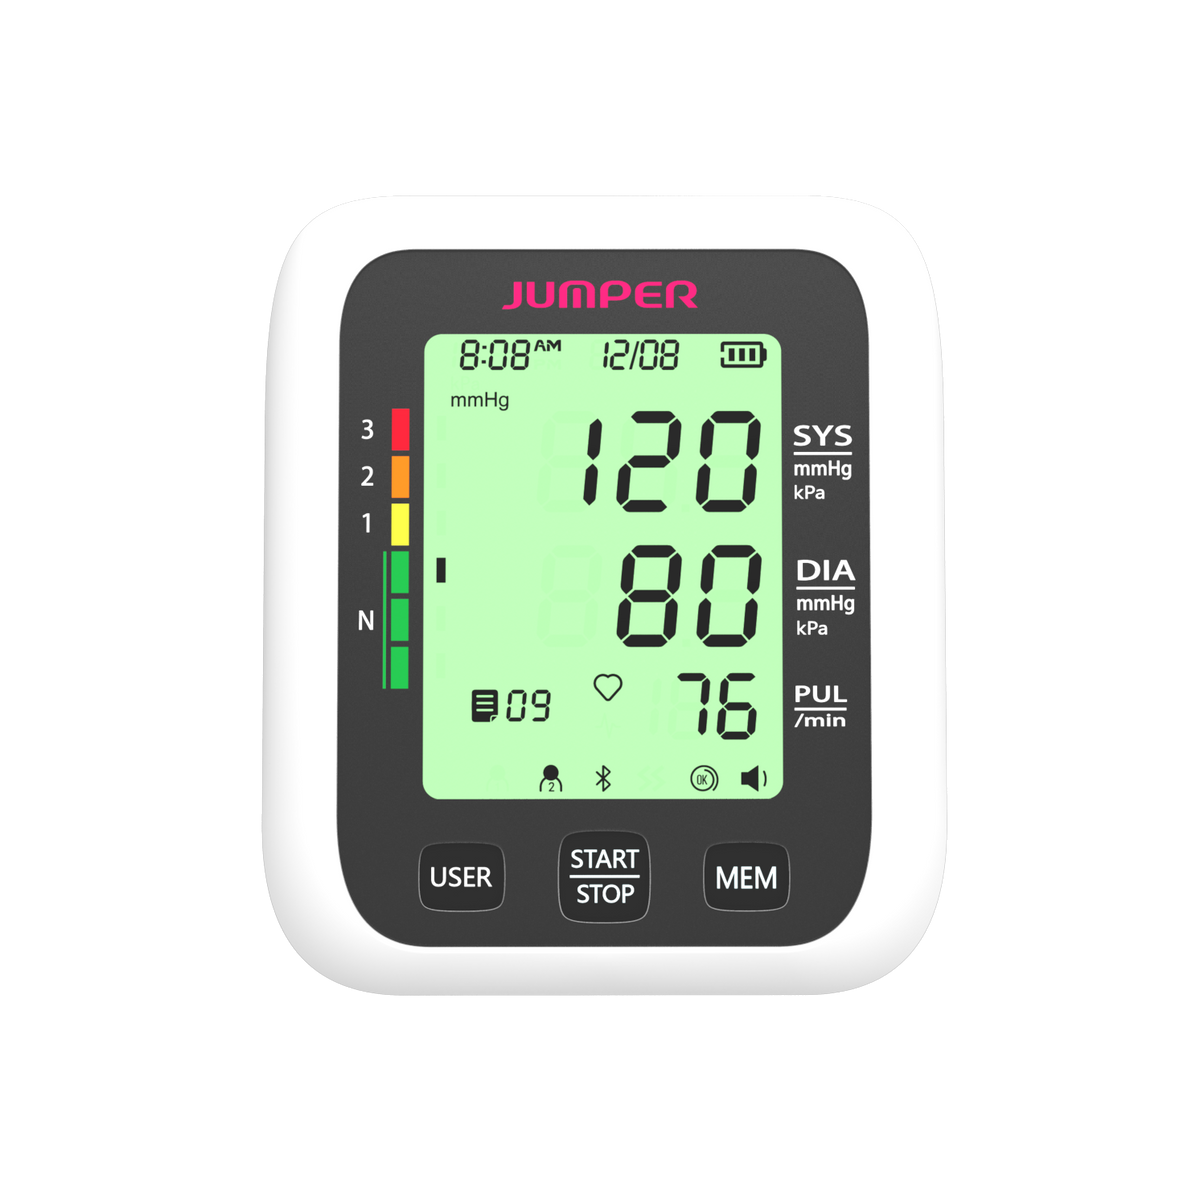 Arm Type Blood Pressure Monitor LCD Digital Display One-touch Operation Blood Pressure Monitor Portable Tow Memories Blood Pressure Monitor